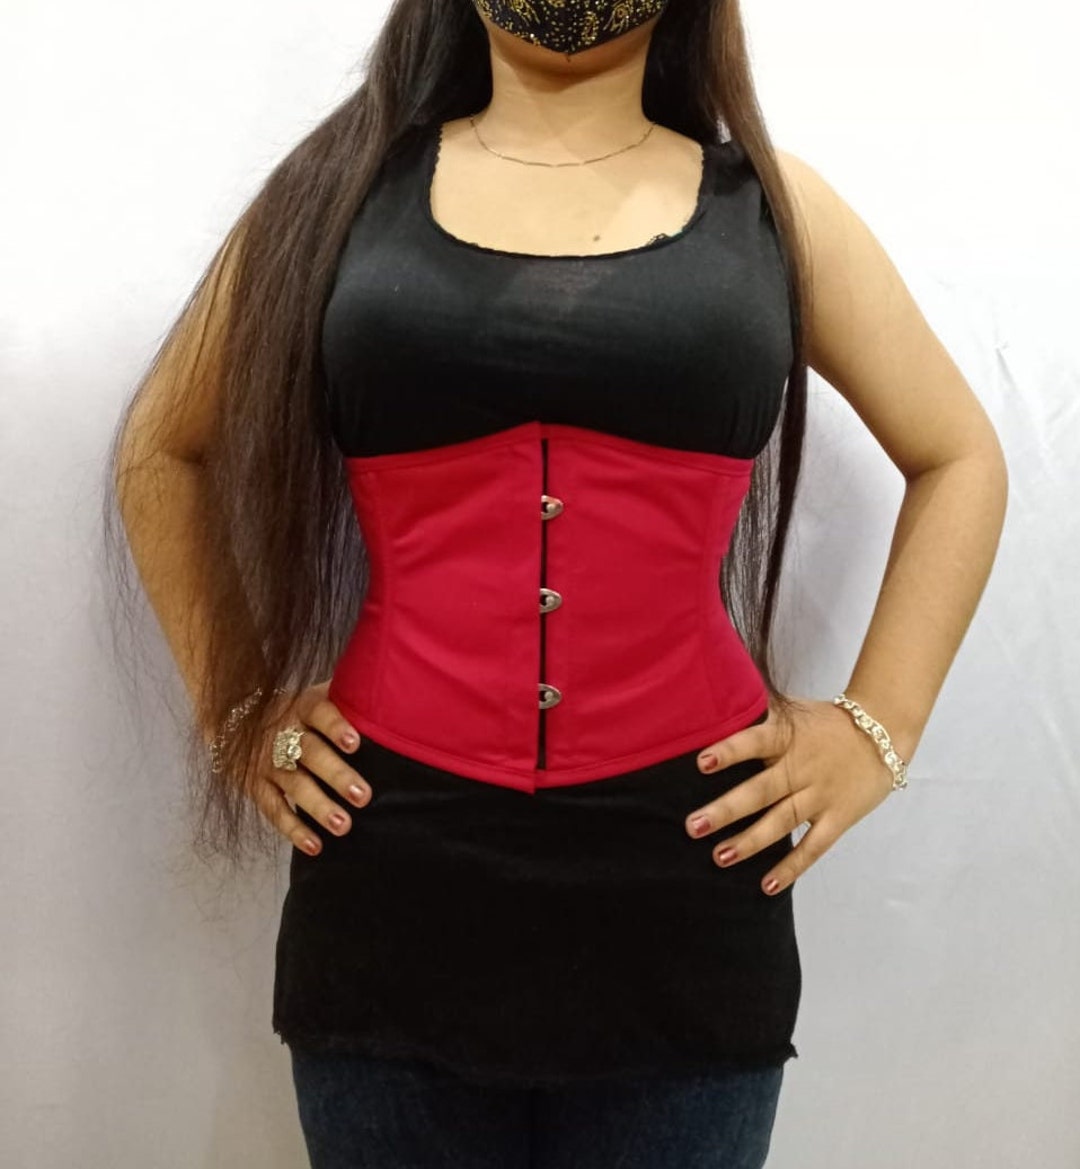 Hobble corset, dress, tight lacing, steel bones, overbust pvc or